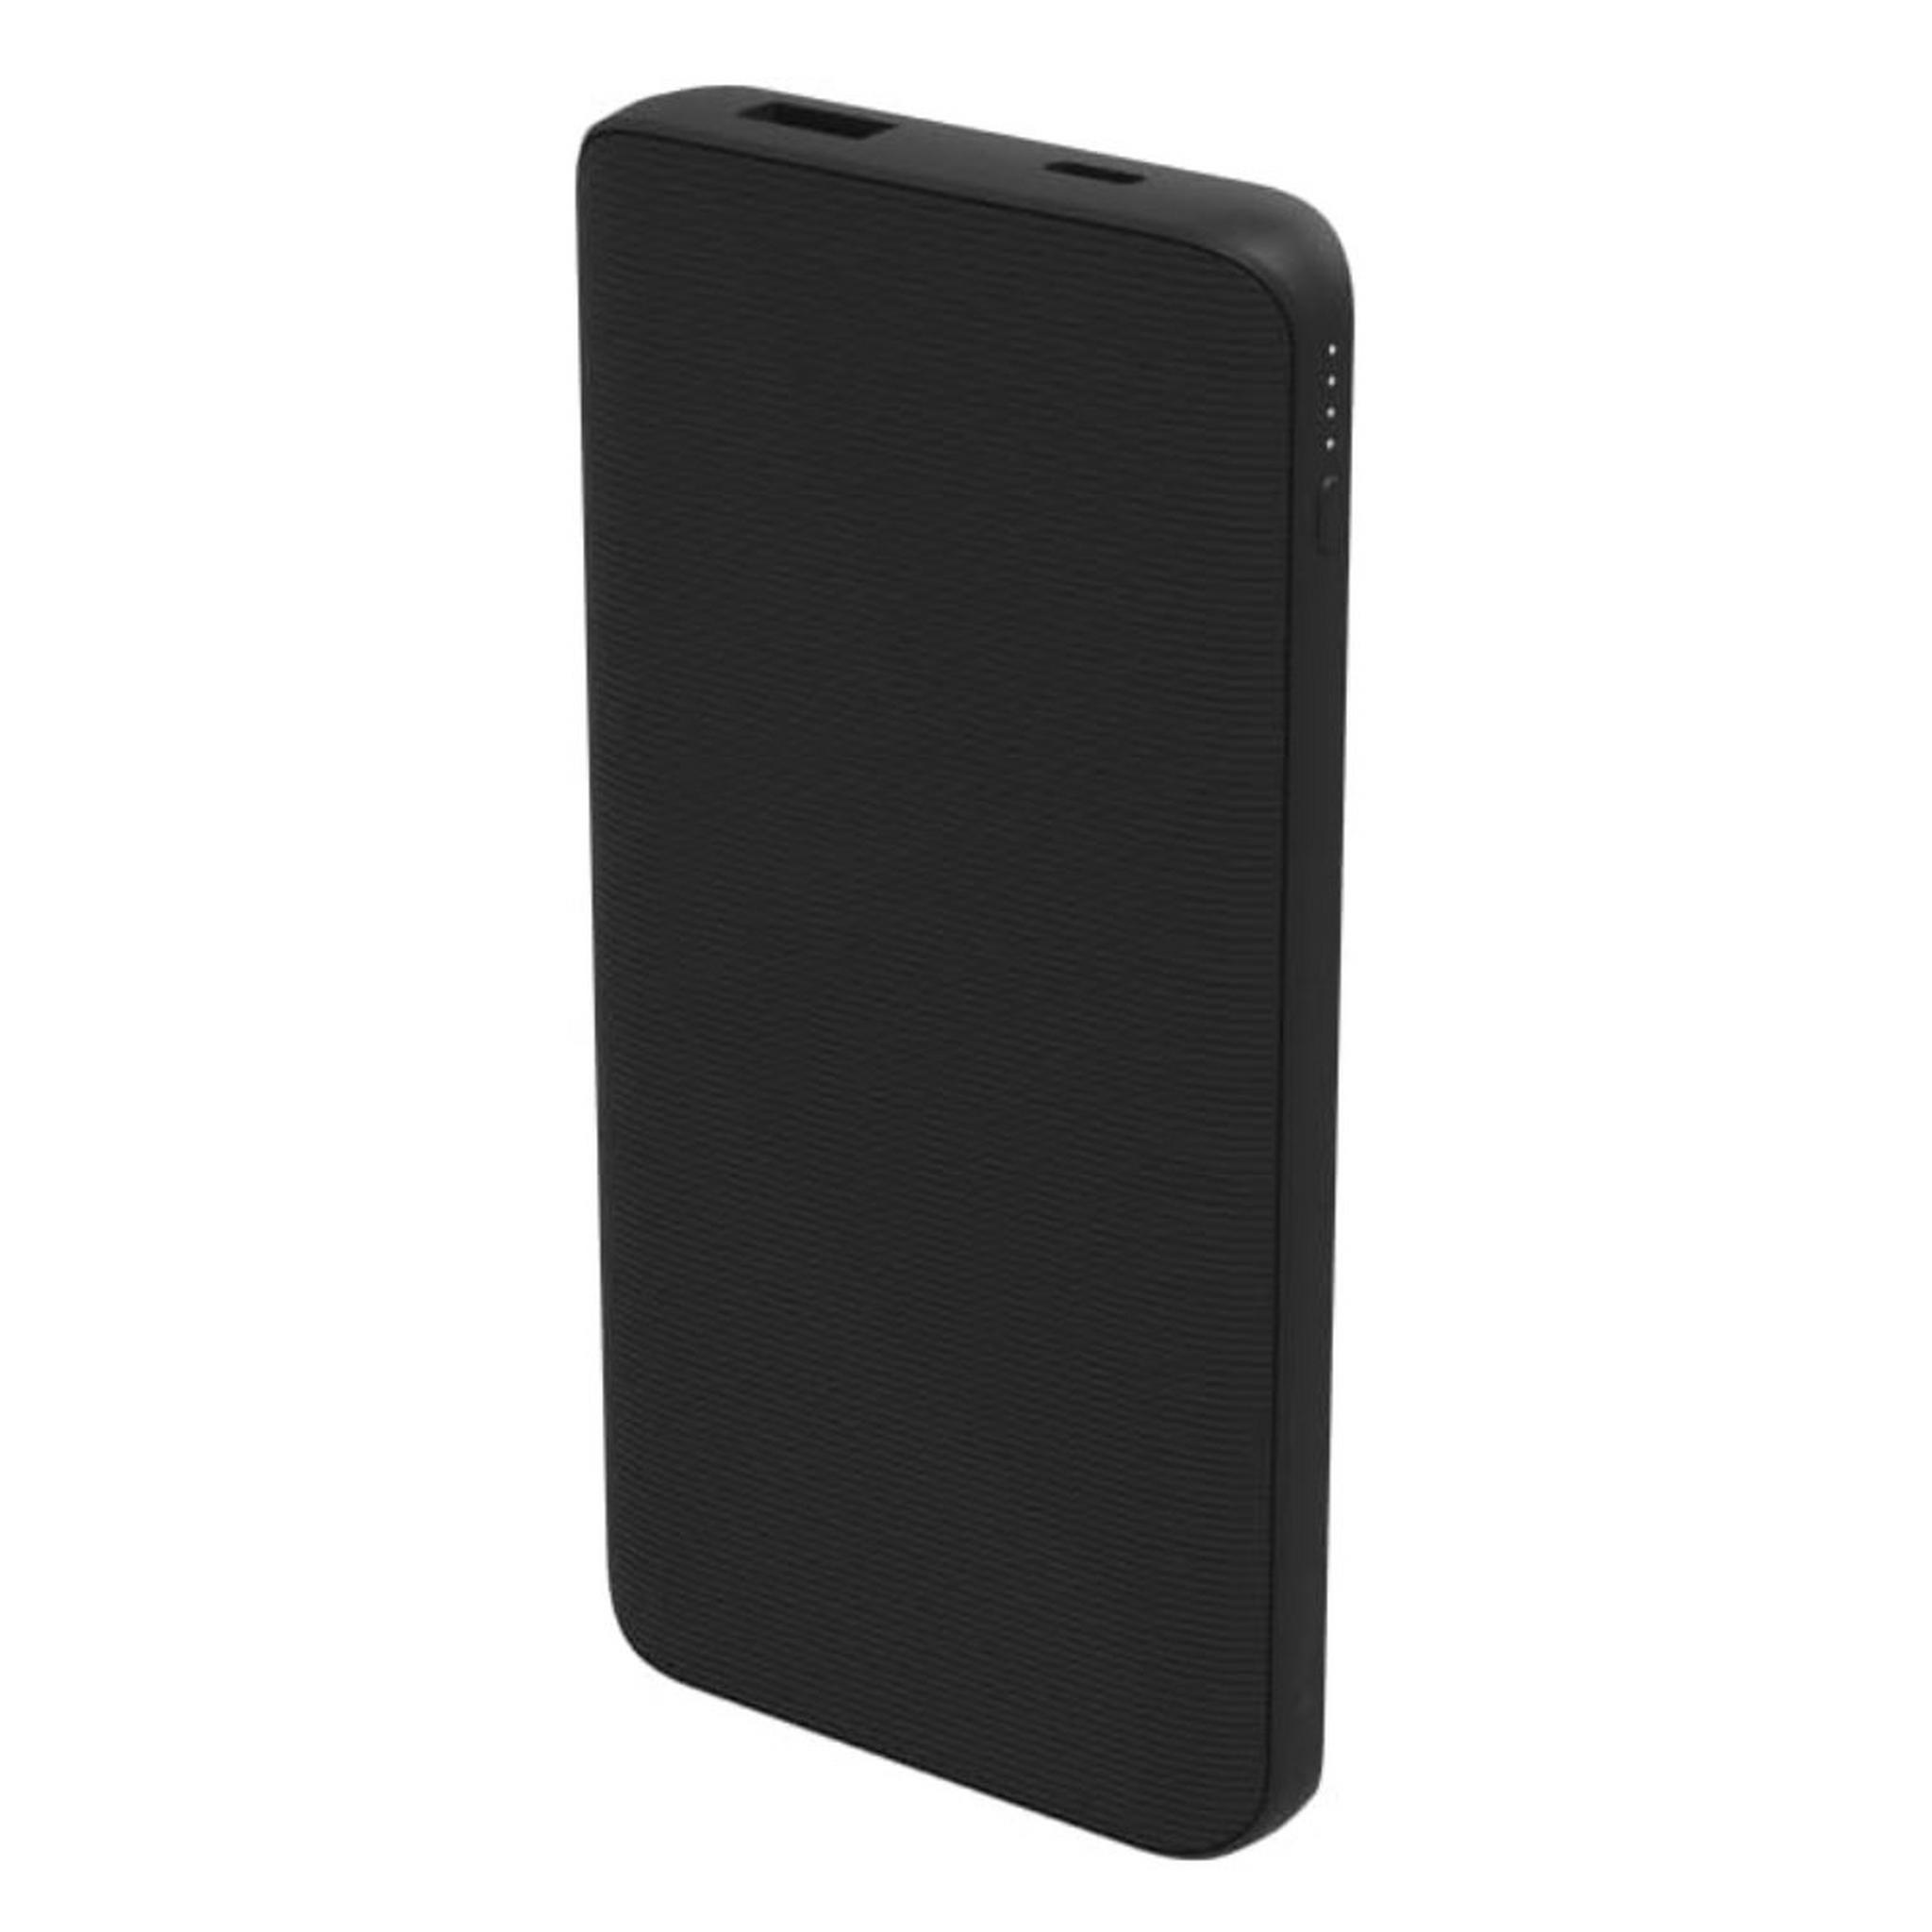 Mophie Essentials Powerstation Portable Battery, 10000 mAh, 401111851 – Black